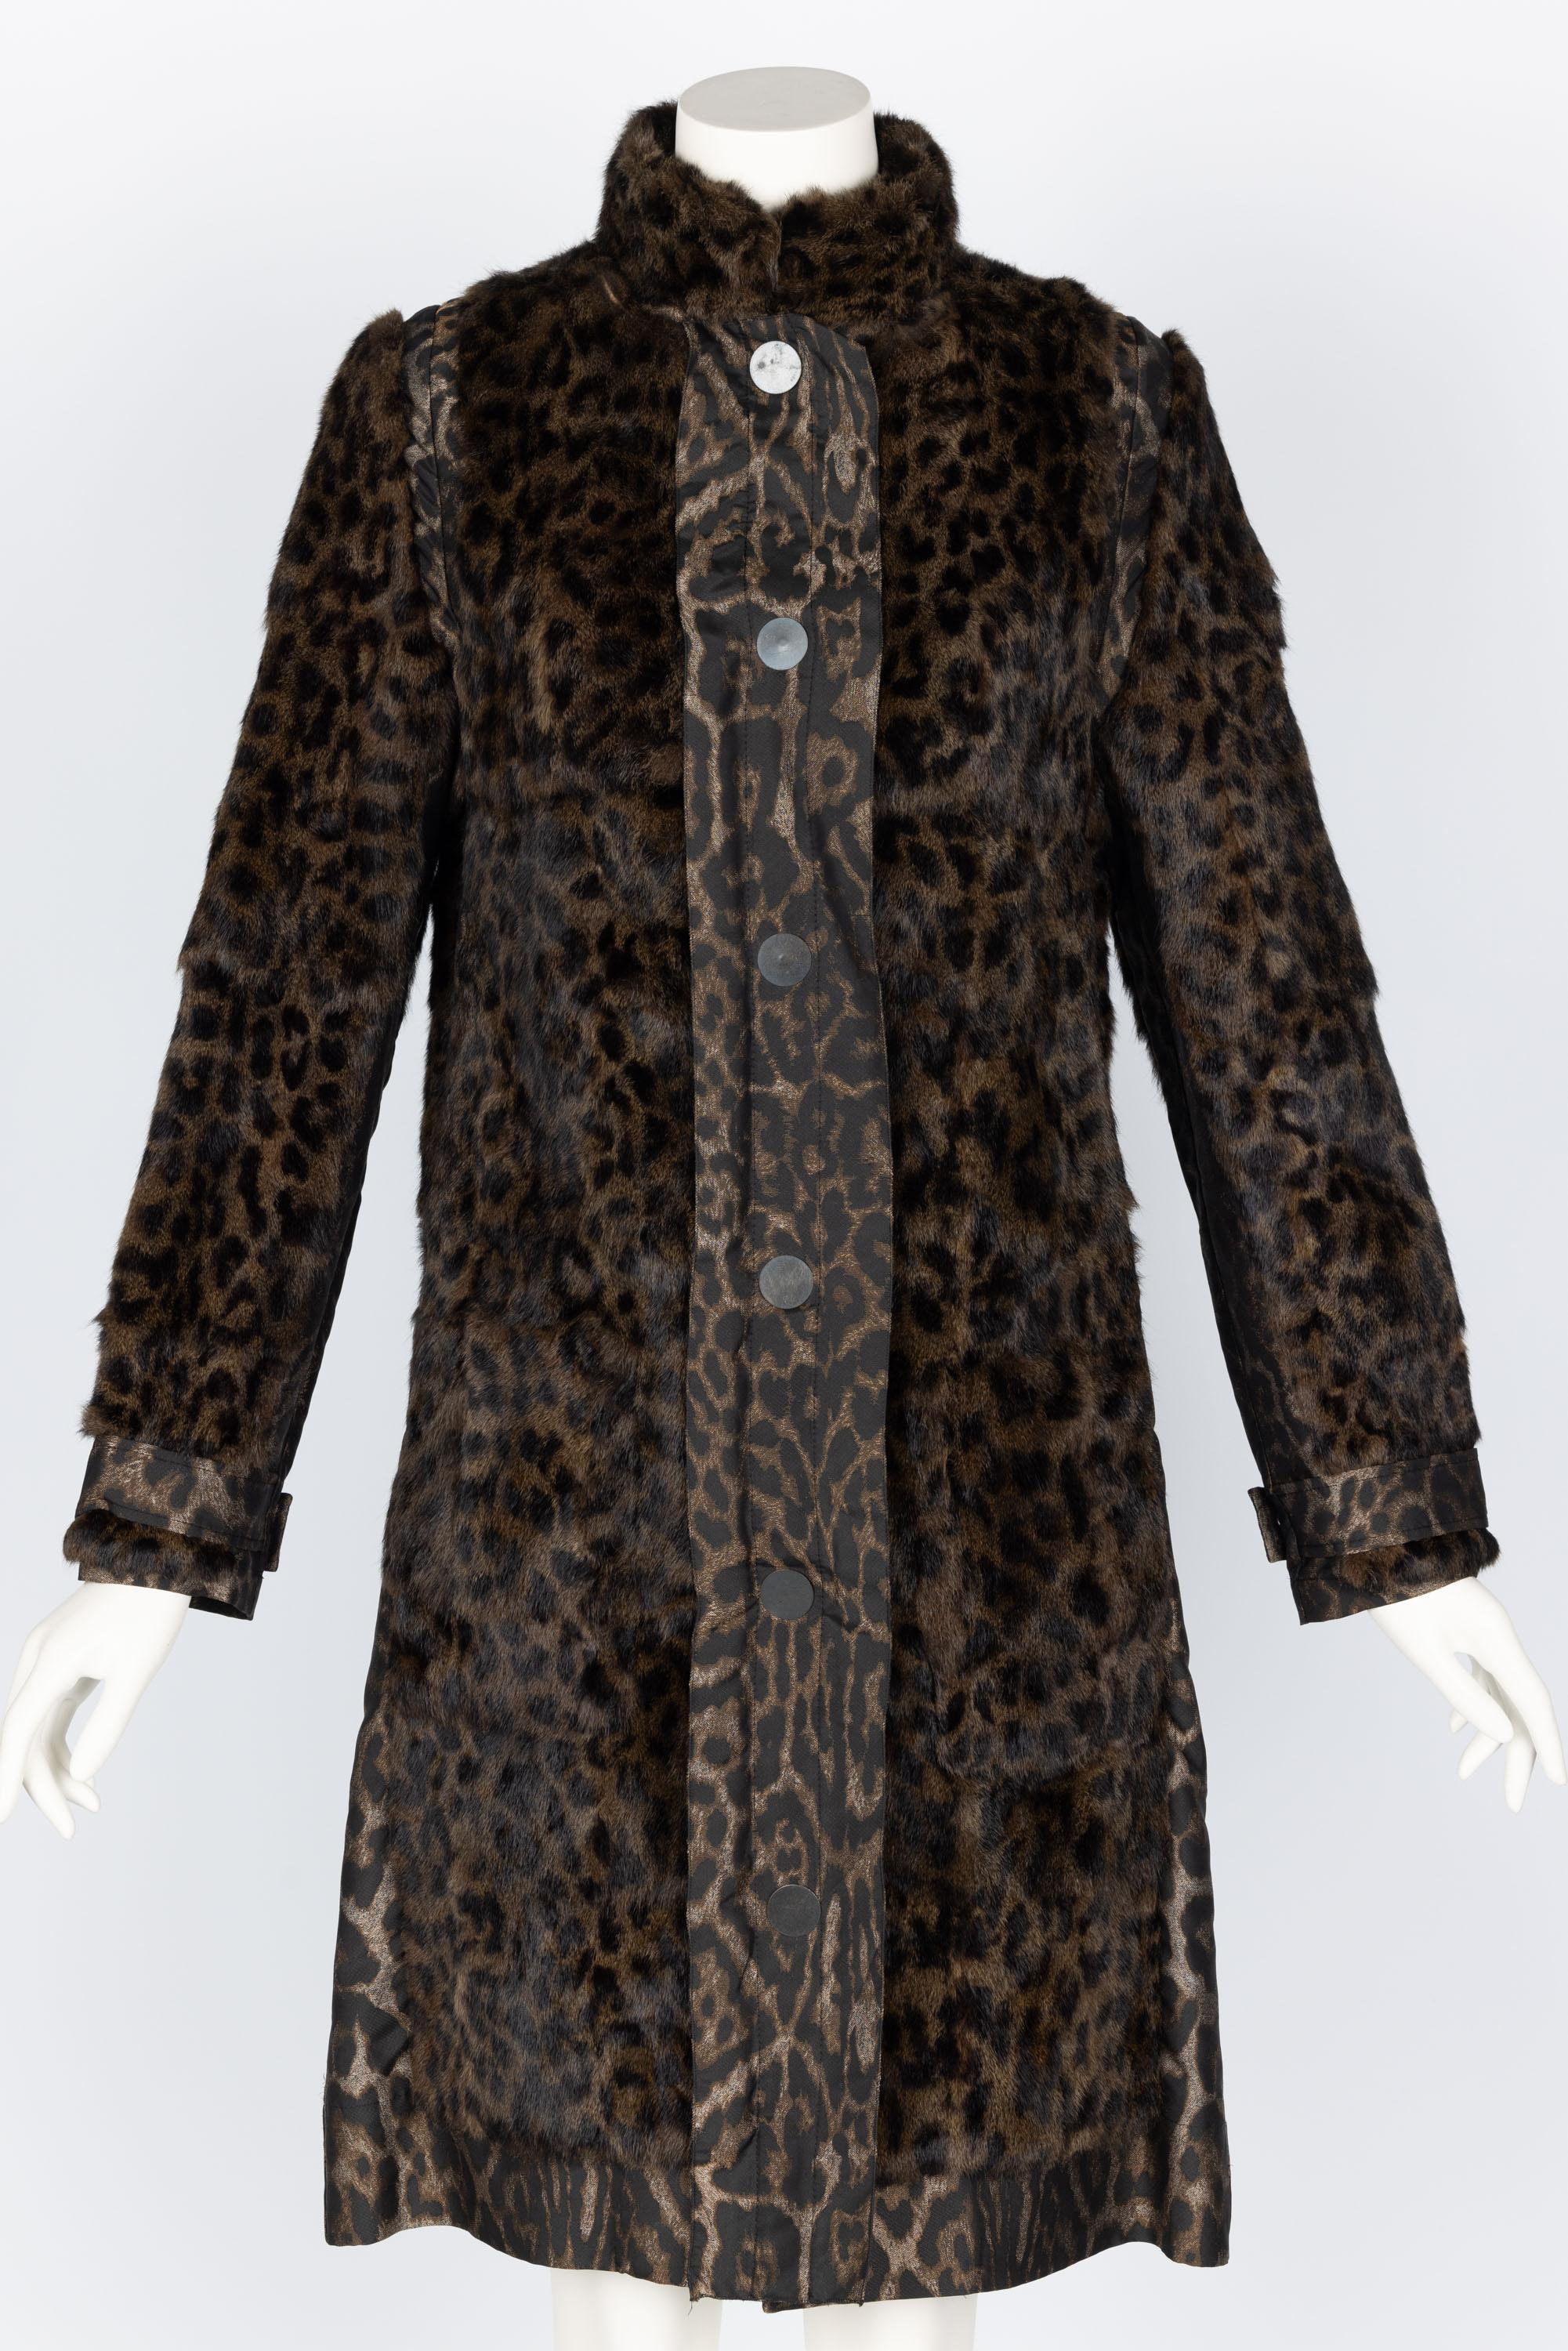 Lanvin Alber Elbaz F/W 2013 Leopard Fur & Taffeta Belted Trench Coat For Sale 2